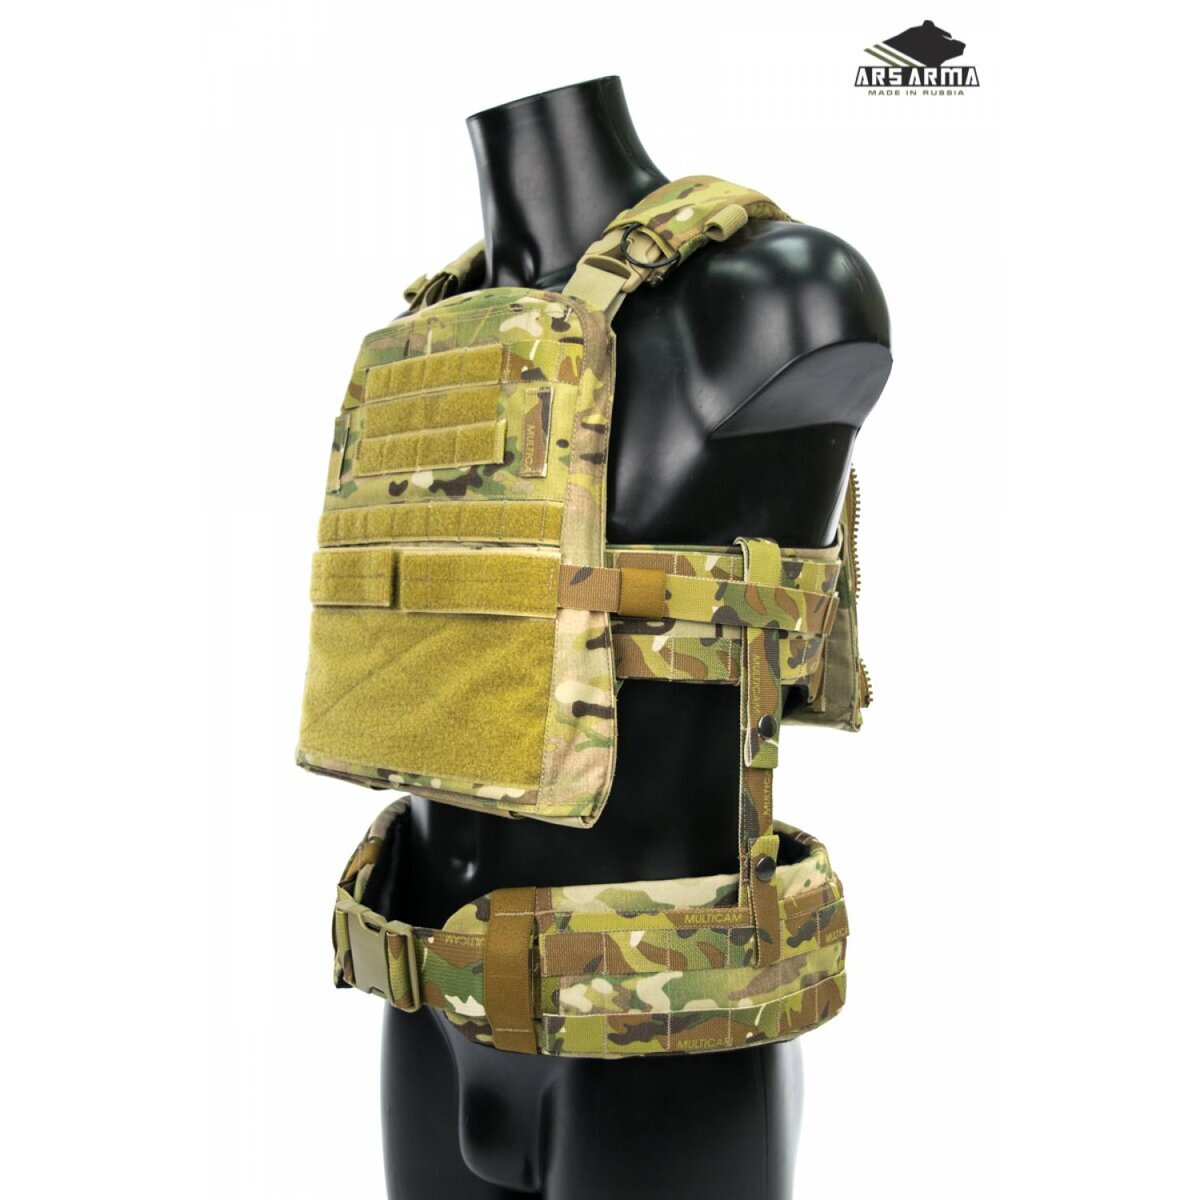 Choosing the right body armor - Bulletproof vest, Protection, Choice, Recommendations, Informative, Advice, Russia, Equipment, Yandex Zen (link), Longpost, Military establishment